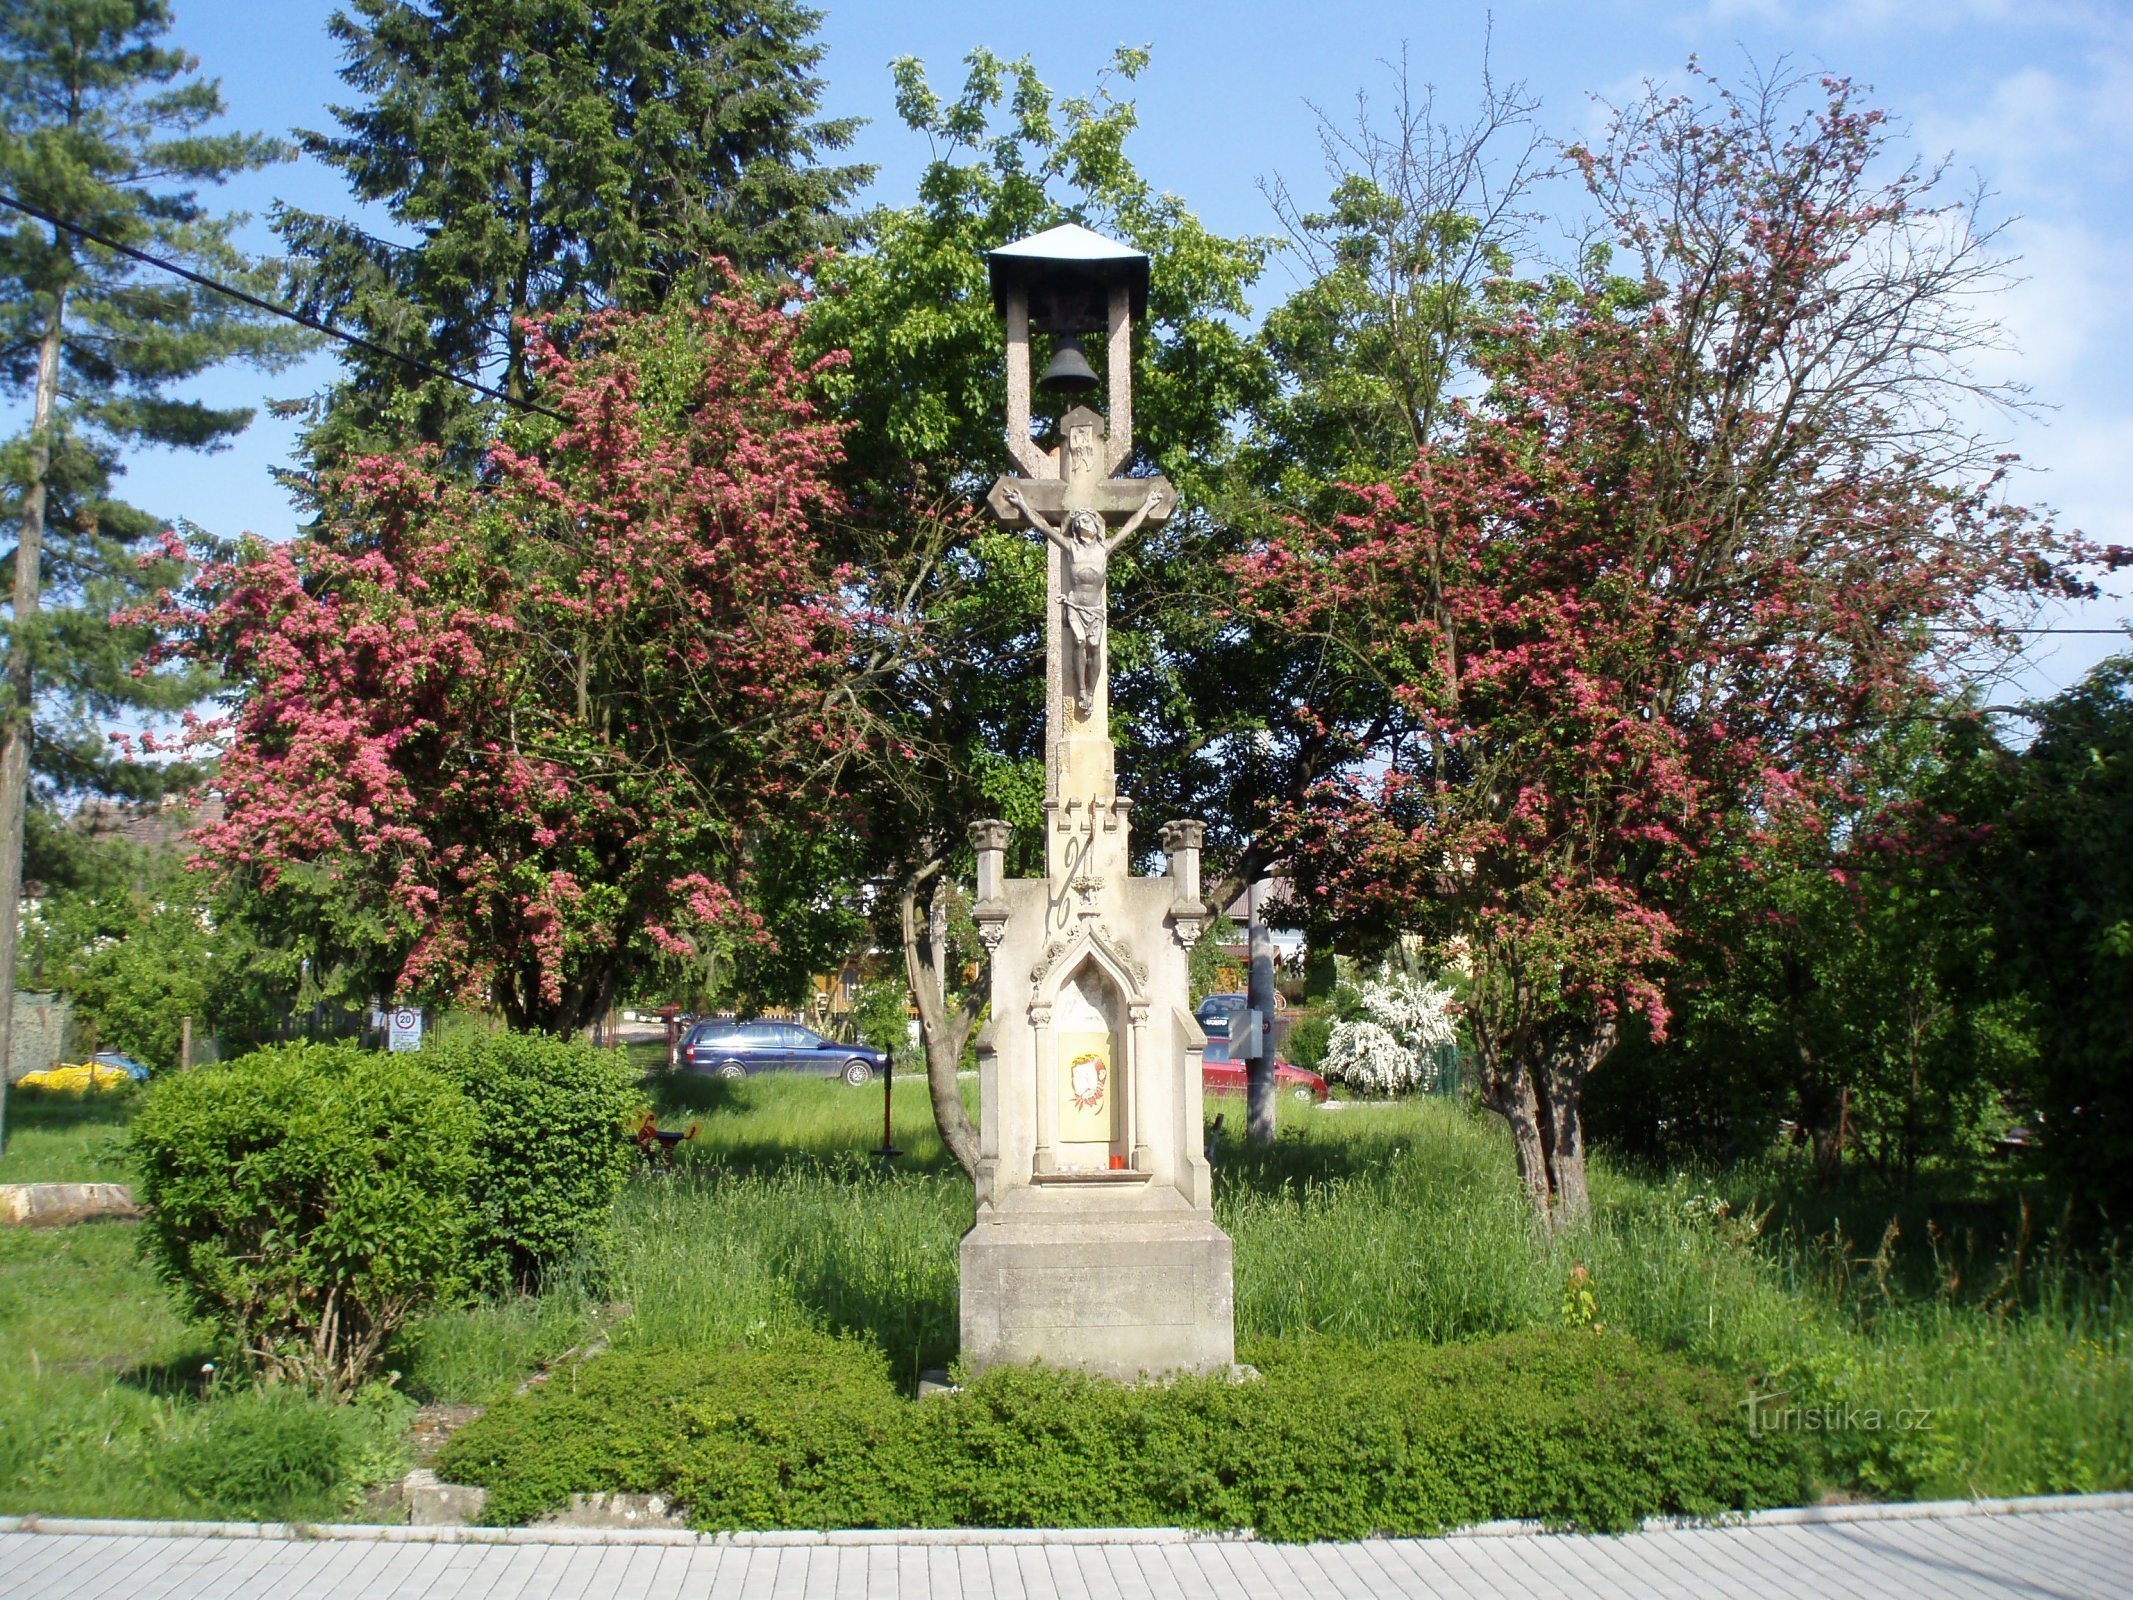 Zvonik s kamenim križem u Roudničkoj (Hradec Králové, 25.5.2010.)